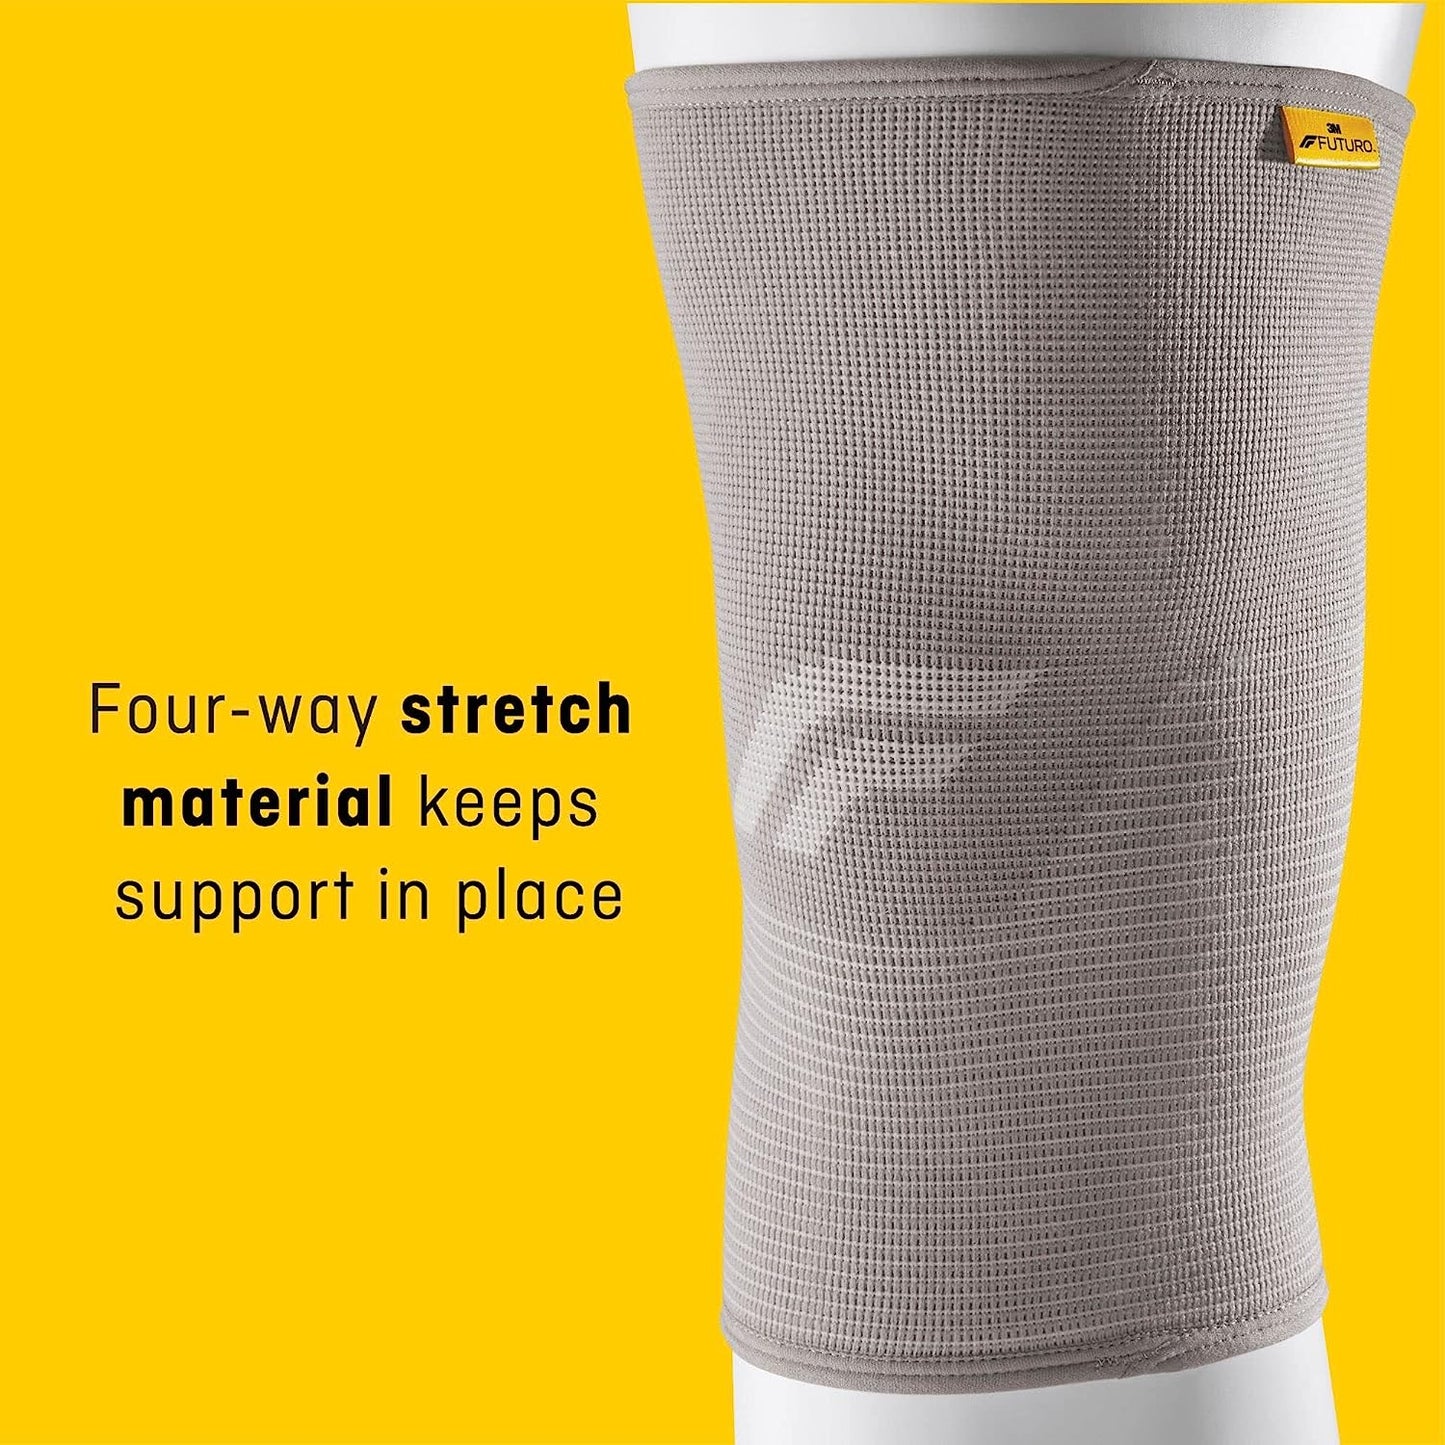 Futuro Comfort Lift Knee Support